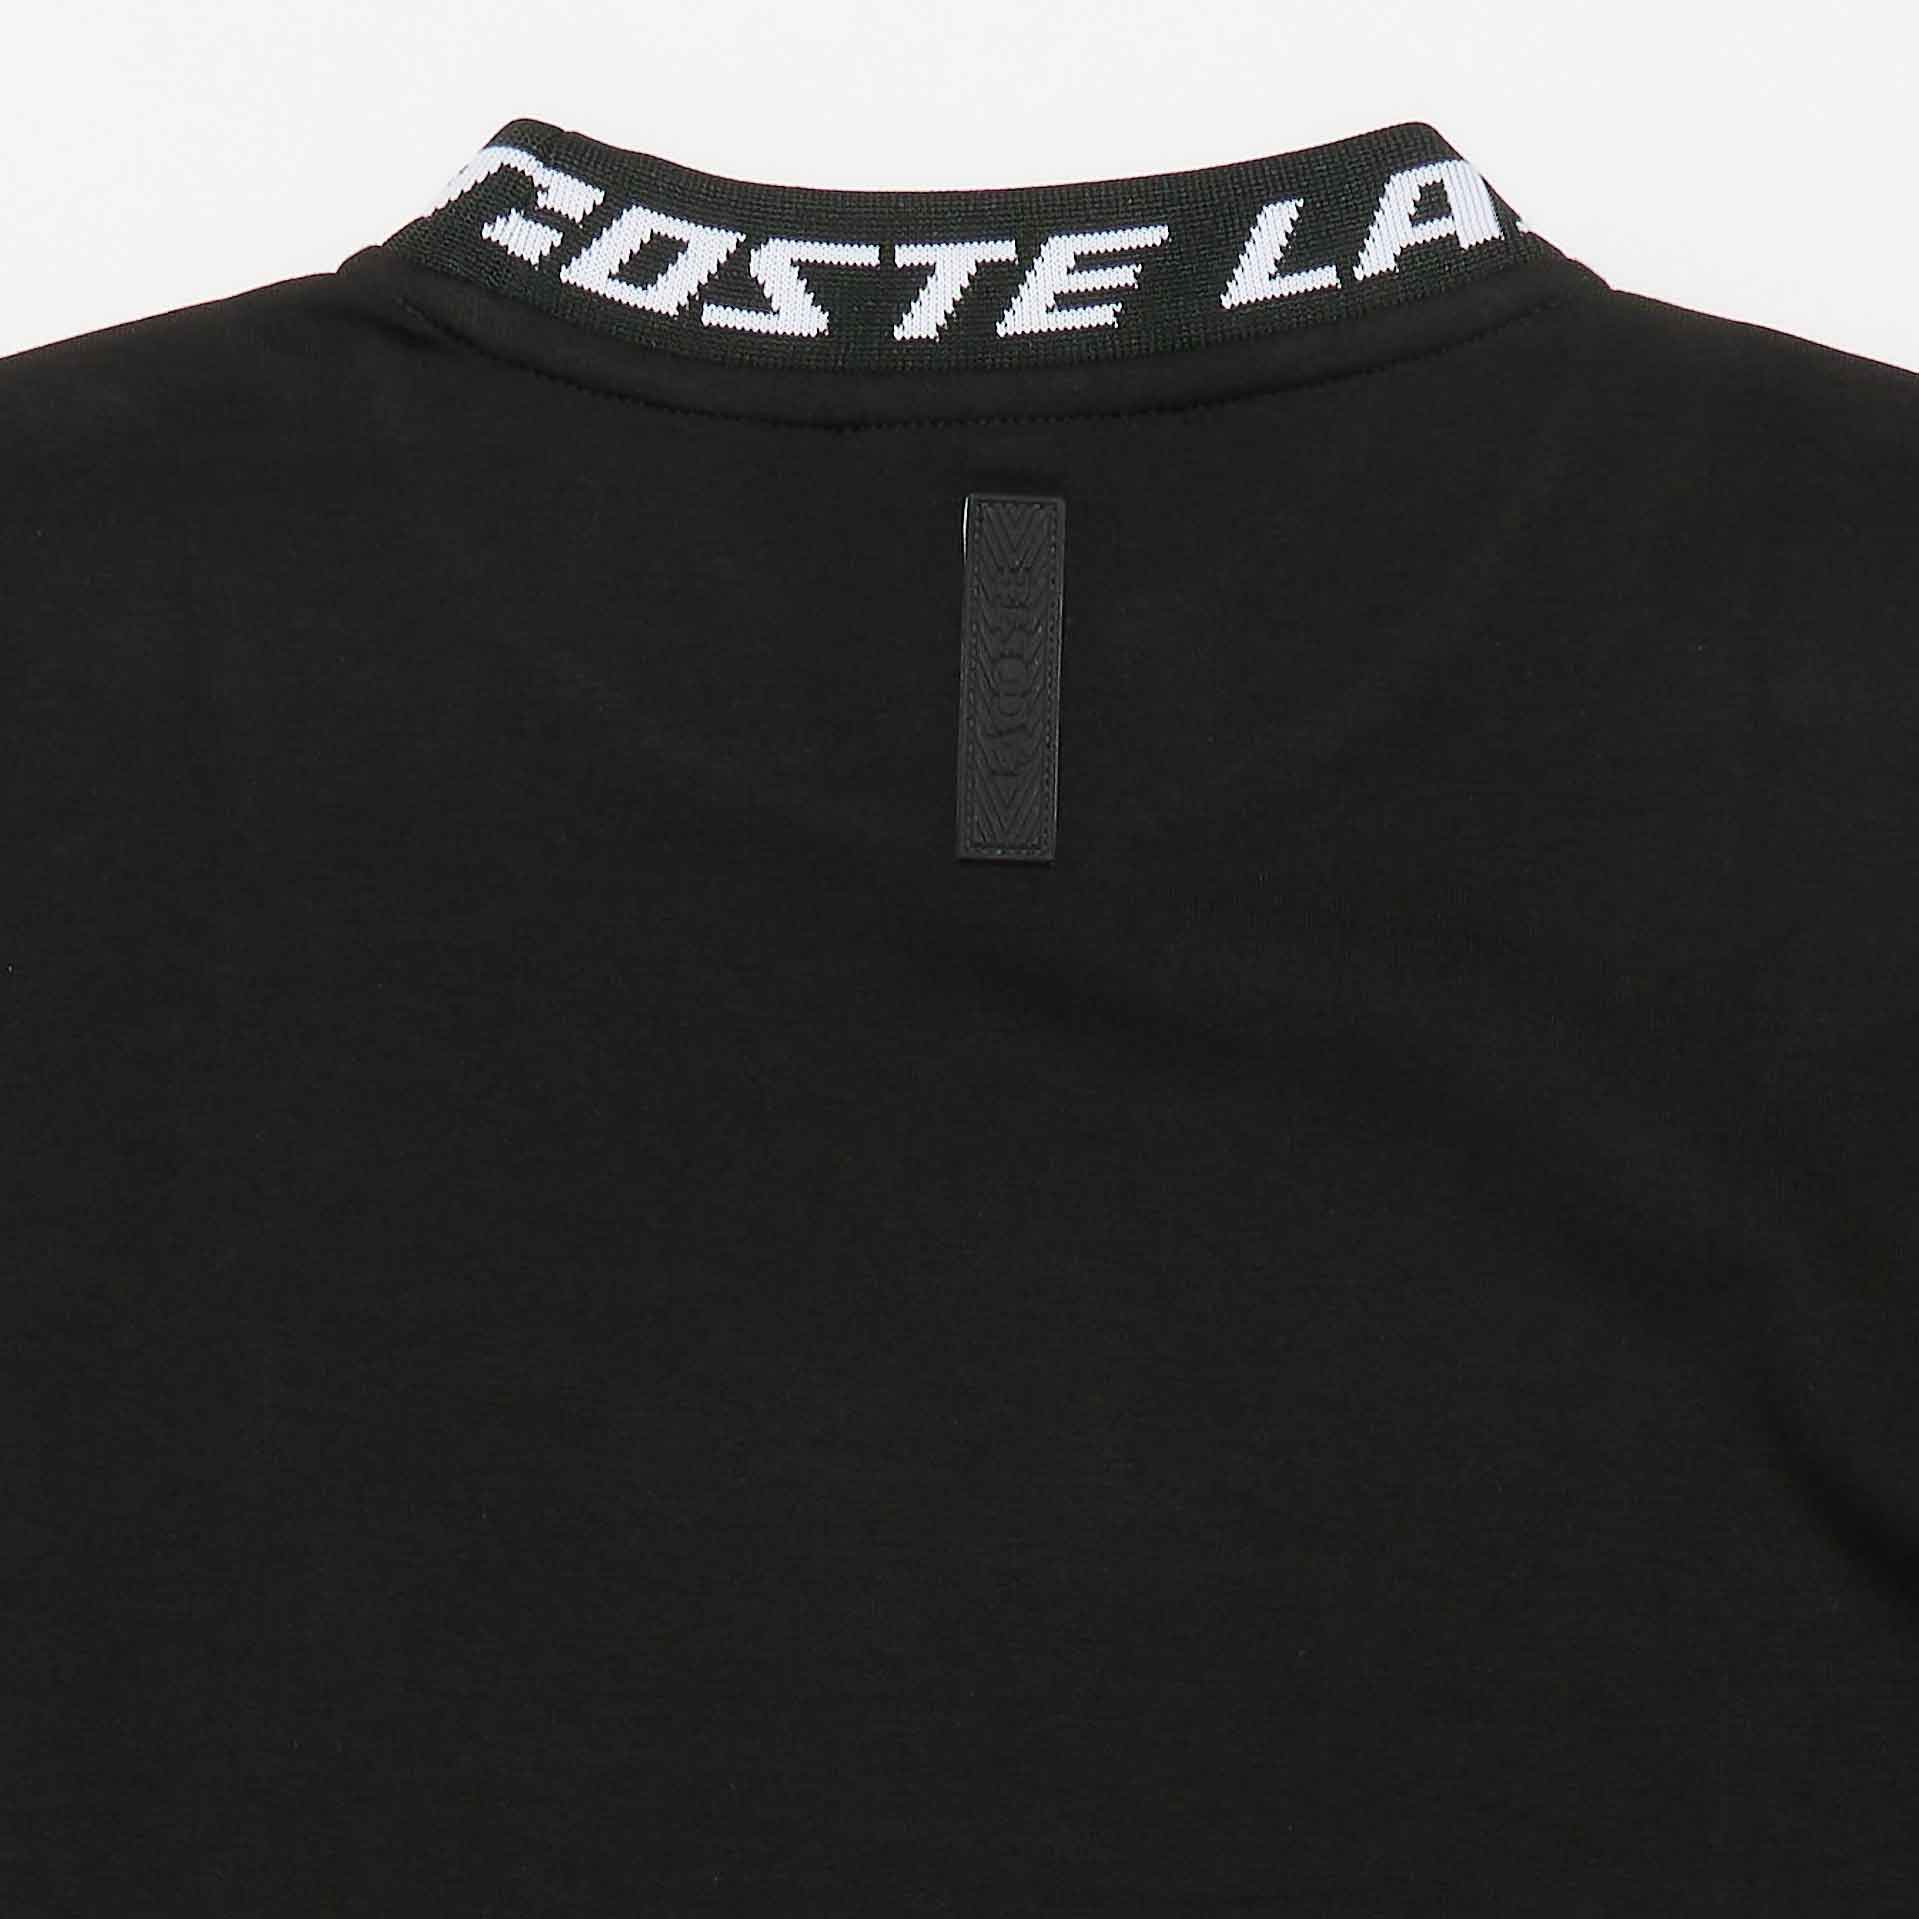 Lacoste Branded Collar Pullover Black